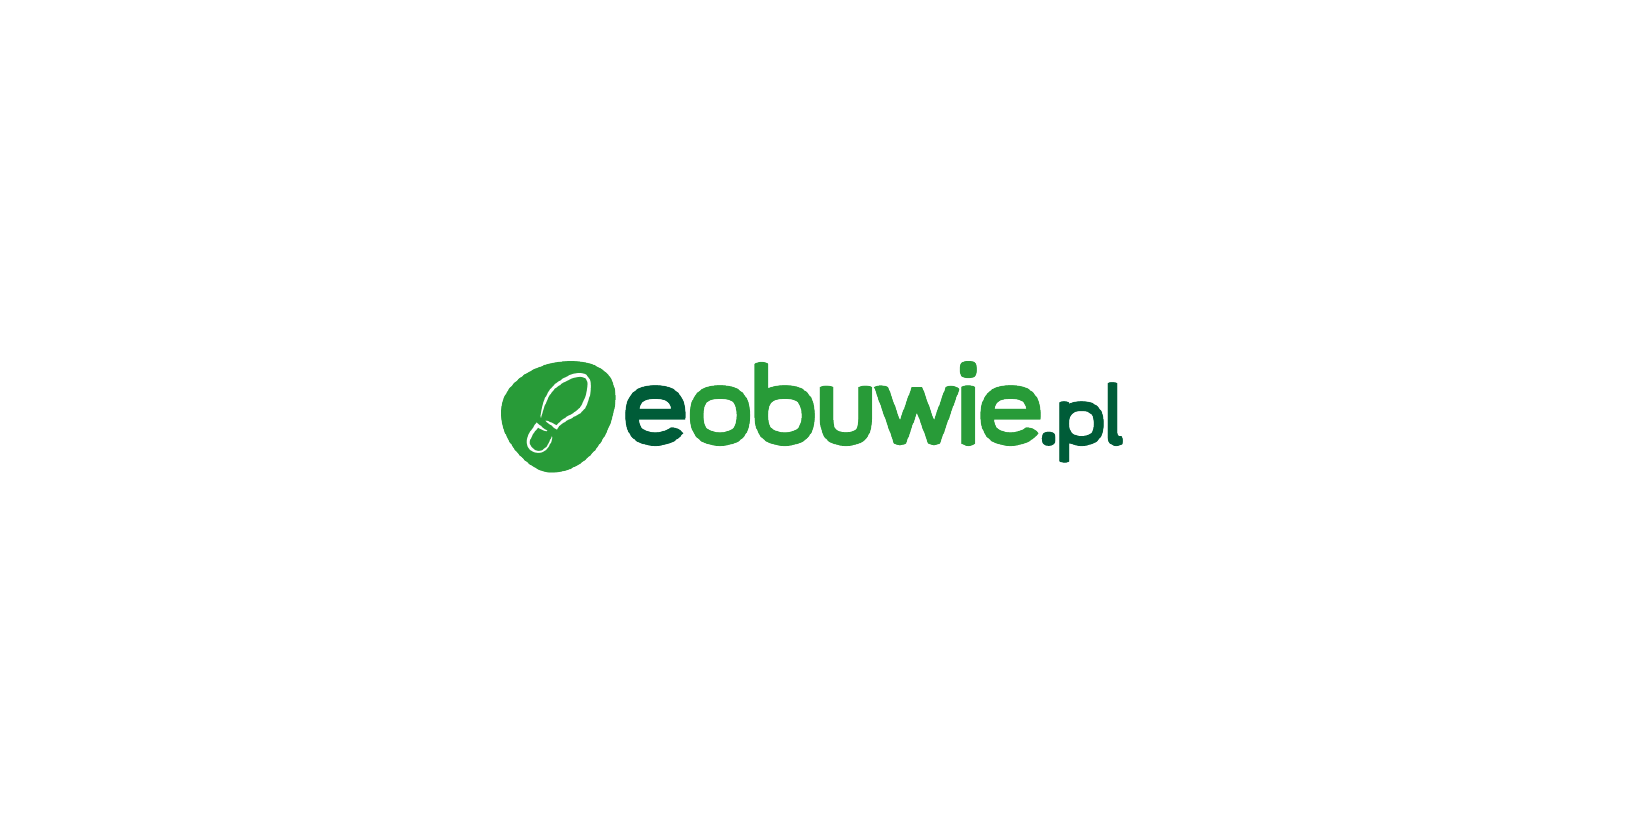 Vision Fund investment portfolio company Eobuwie's logo